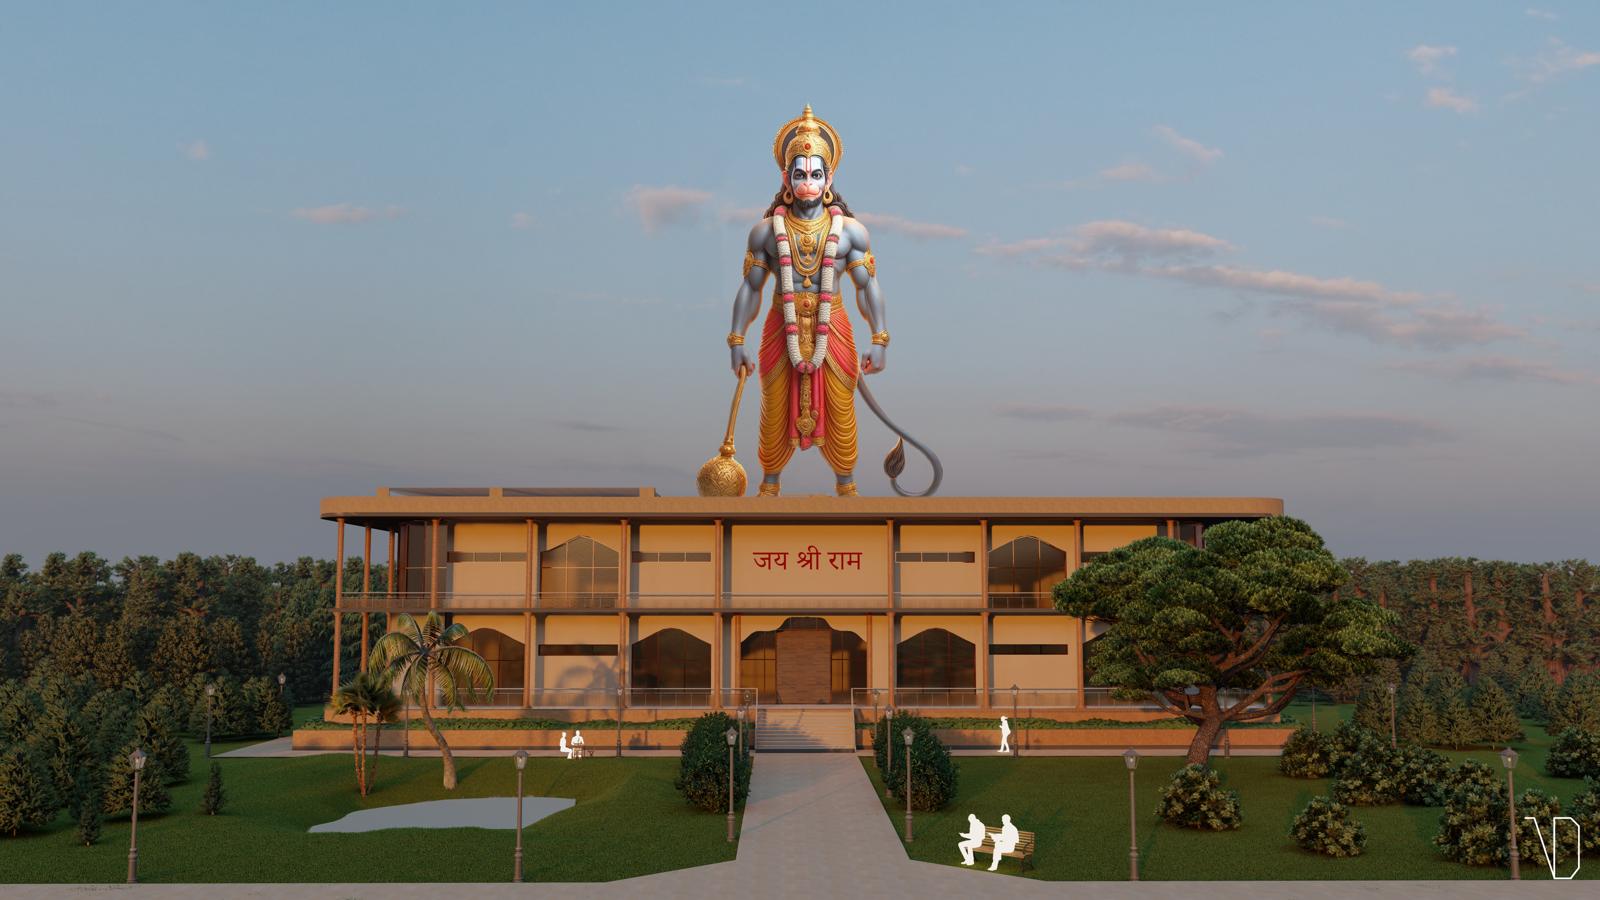 Shri Hanuman Youth Centre: A Fusion of Heritage and Community Development